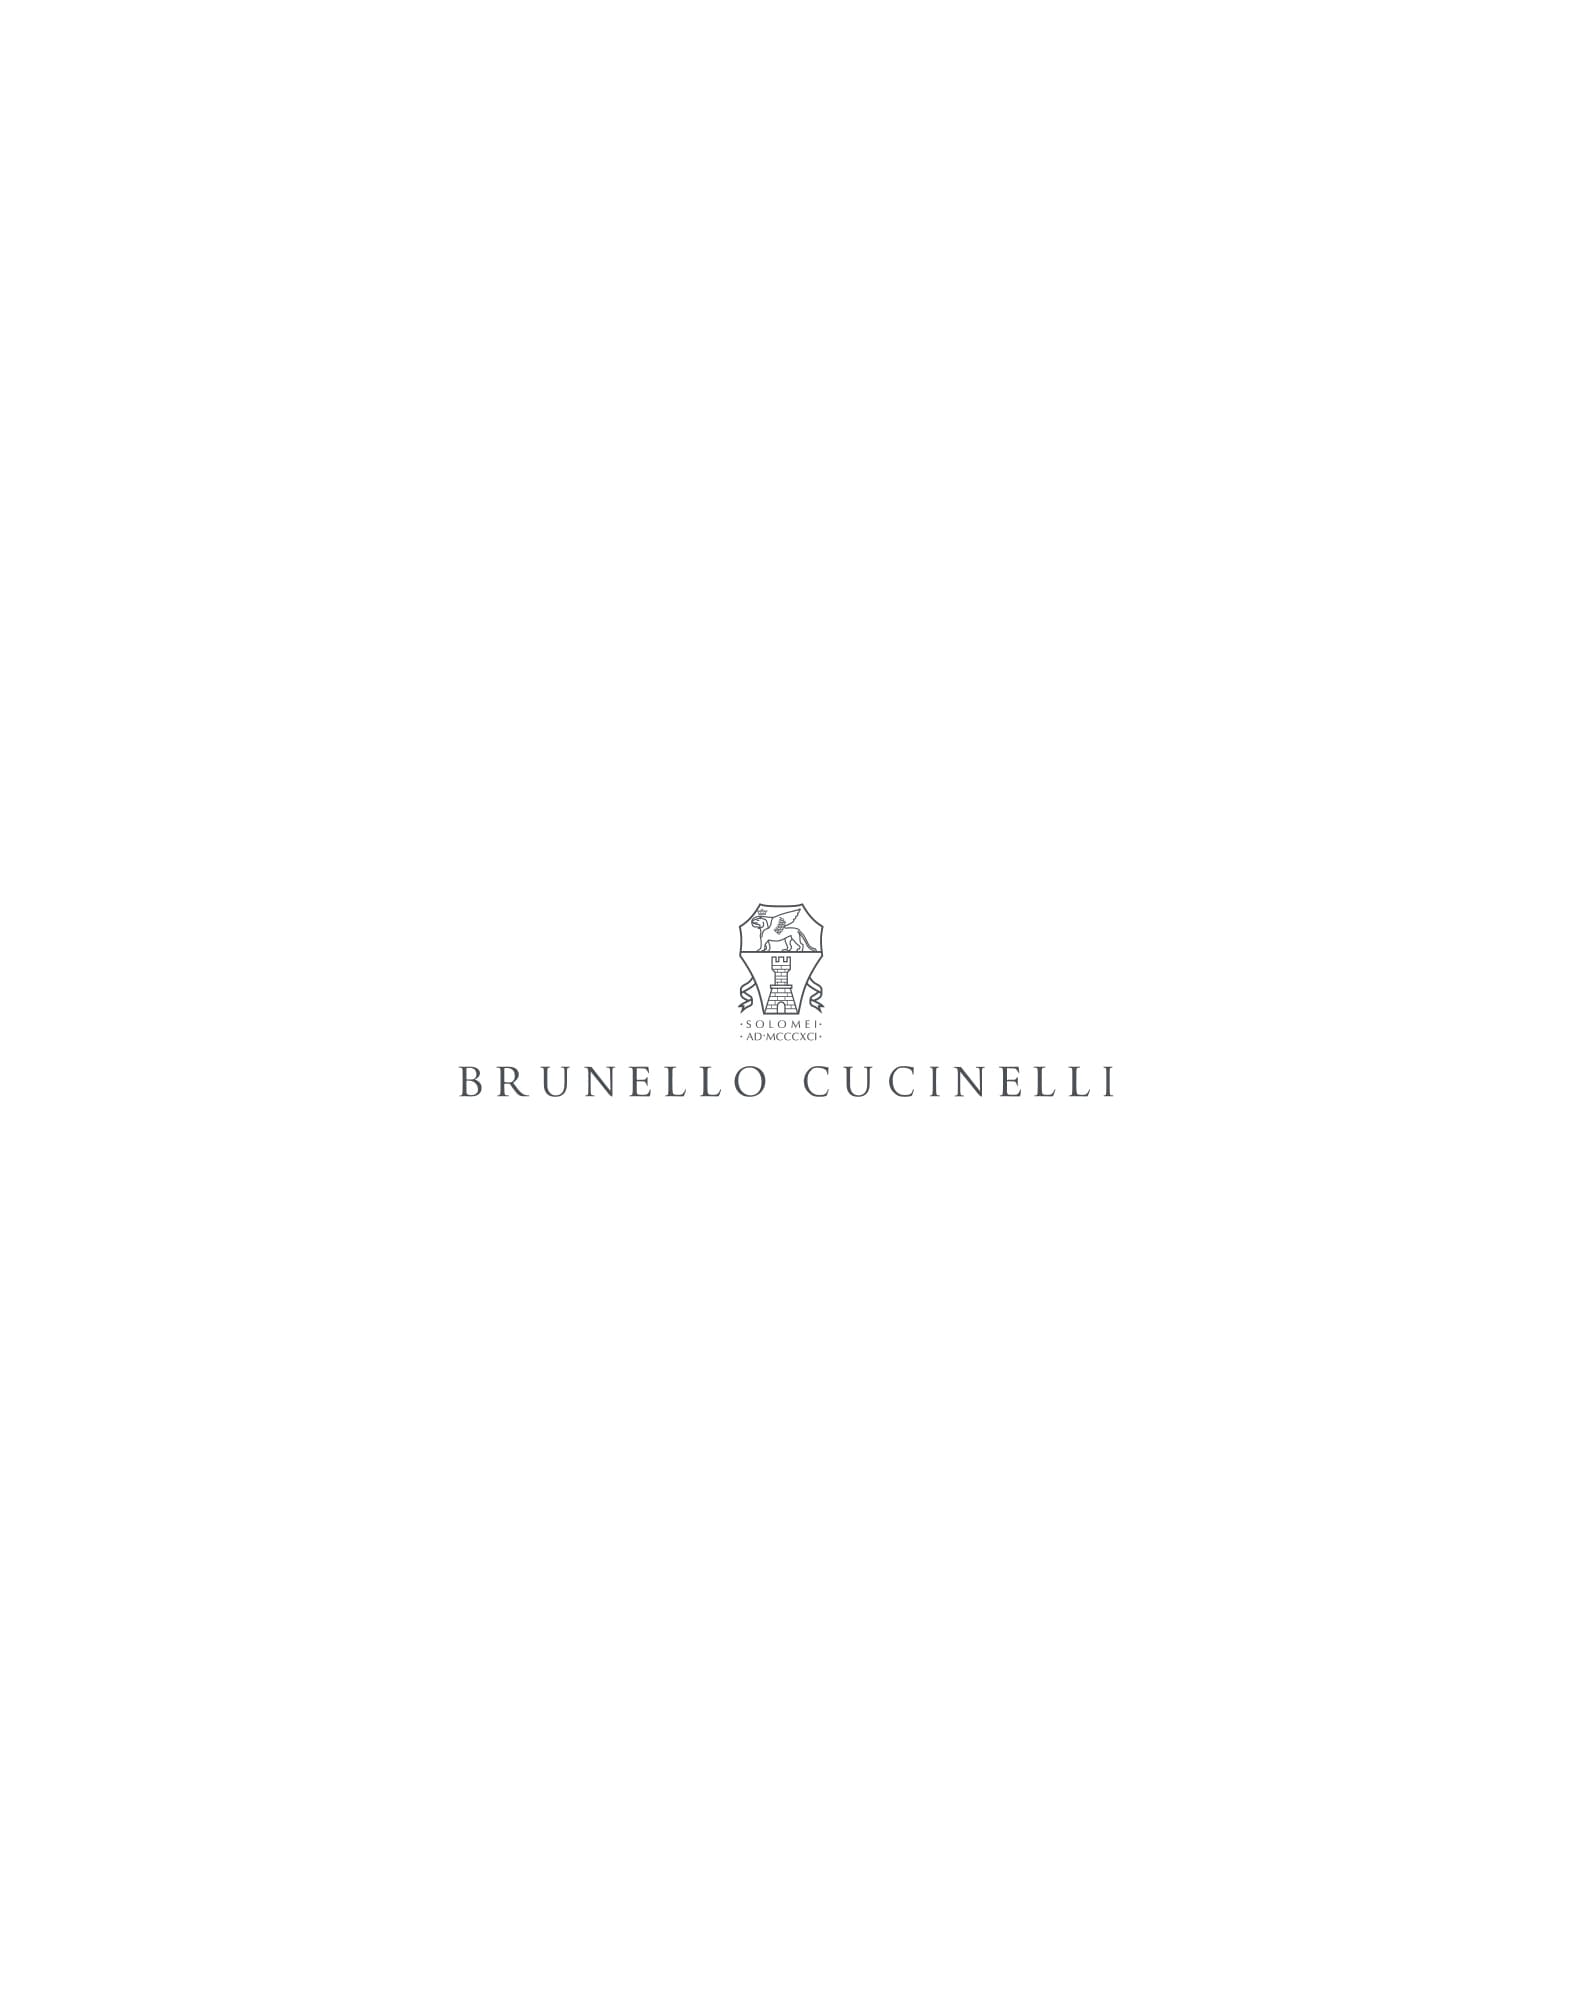 Shopper bag Brown Woman - Brunello Cucinelli